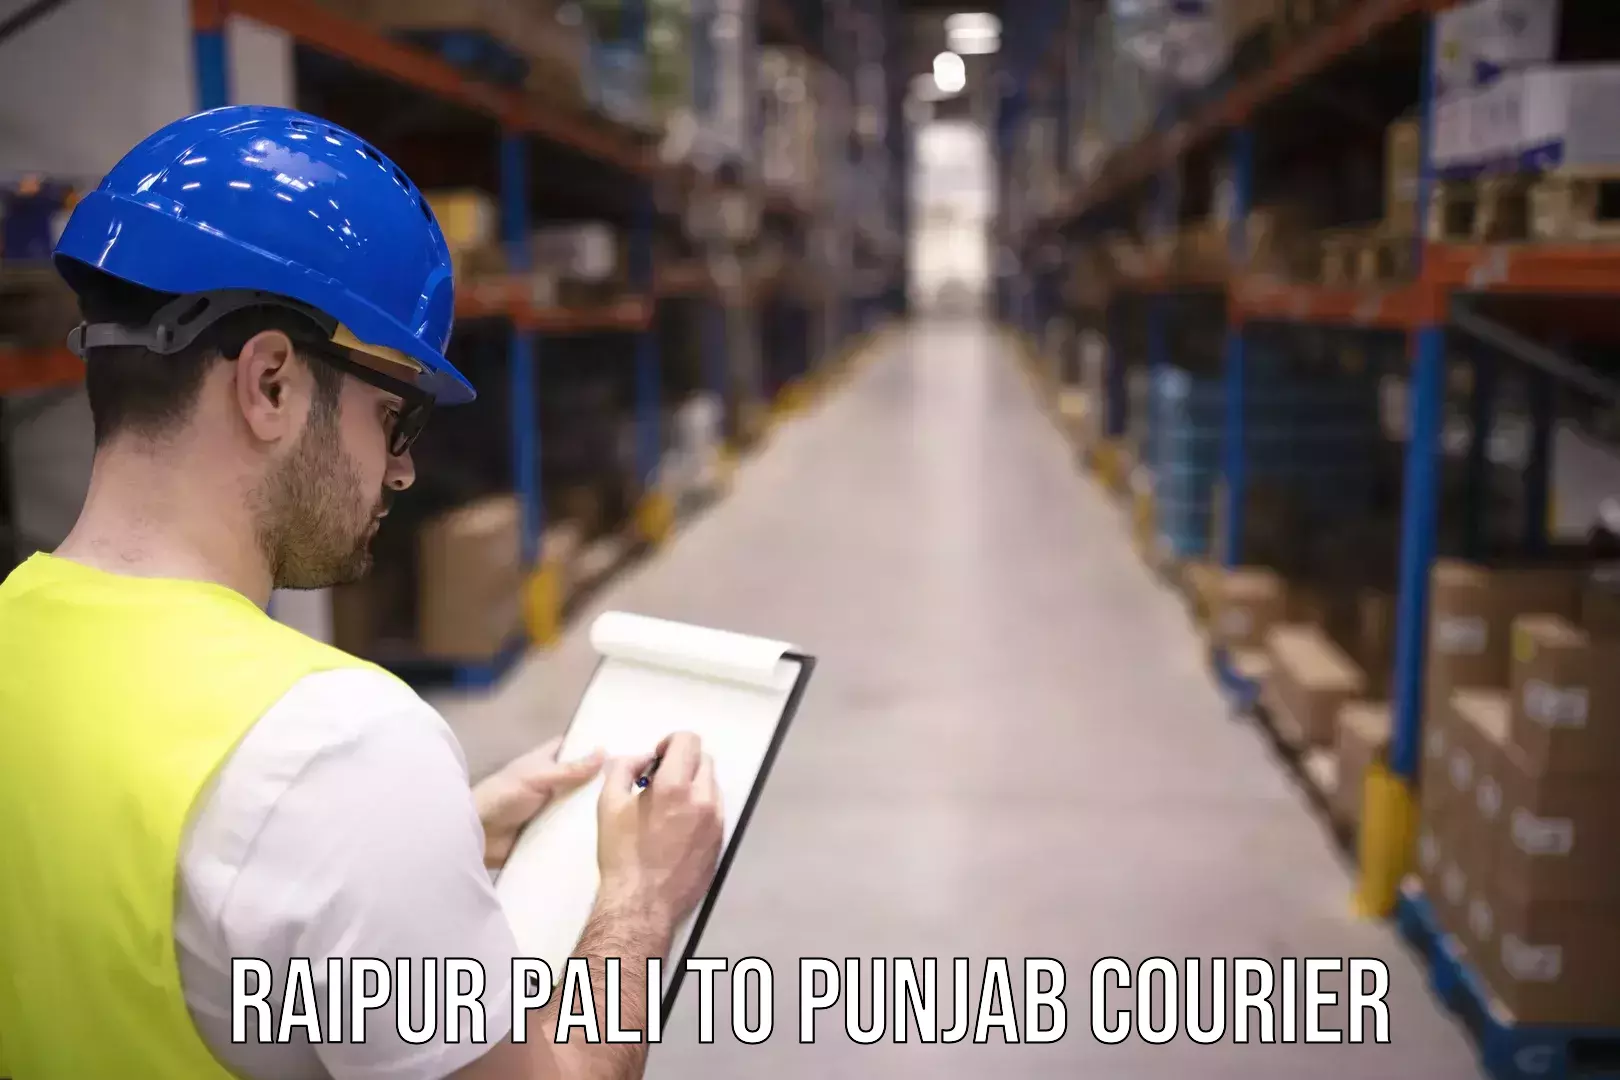 Courier service partnerships Raipur Pali to Dhilwan